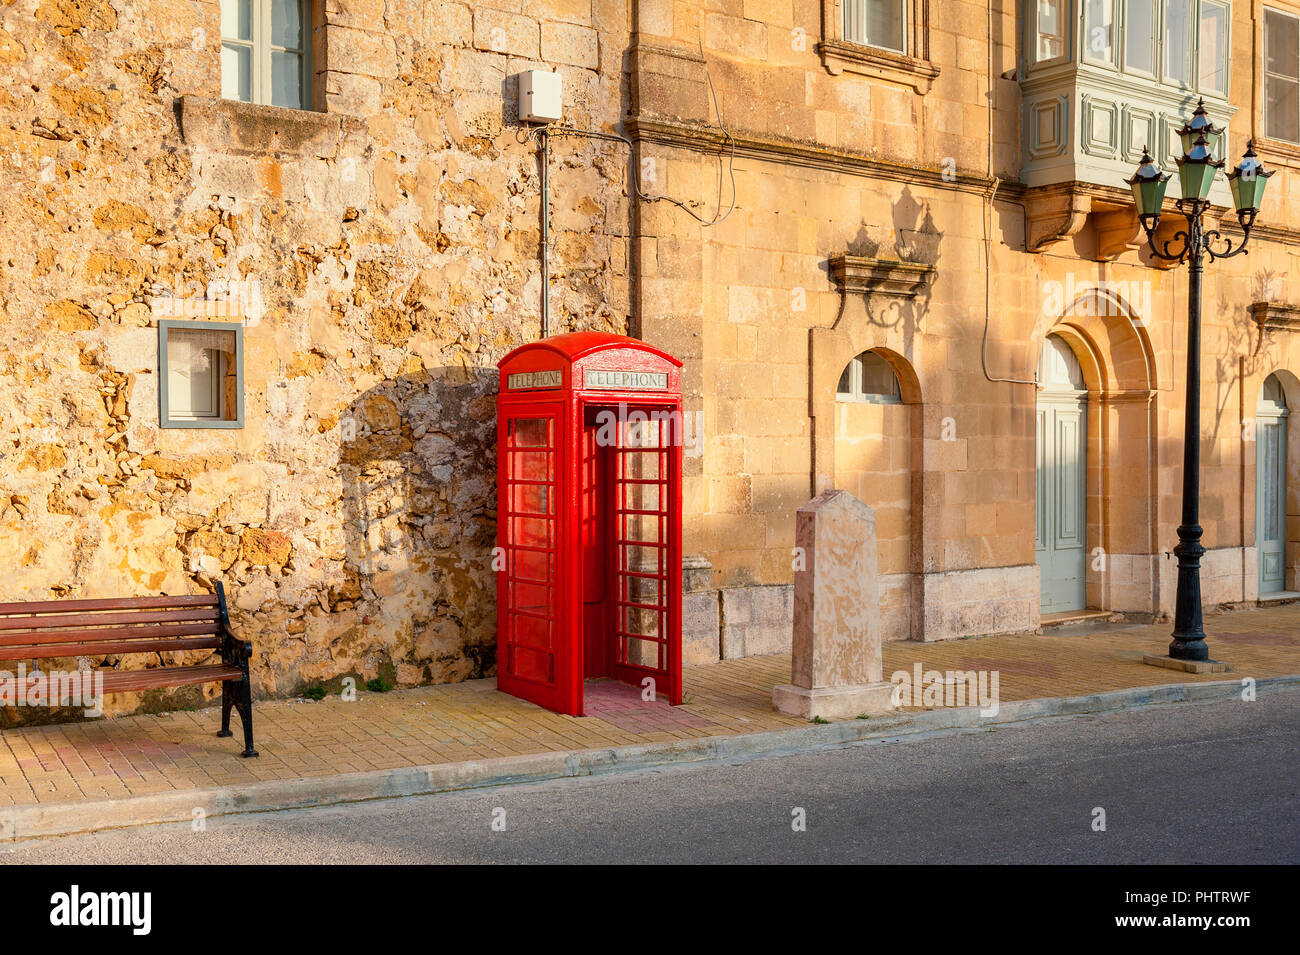 Telephone Booth in Street of Gozo Malta Stock Photo